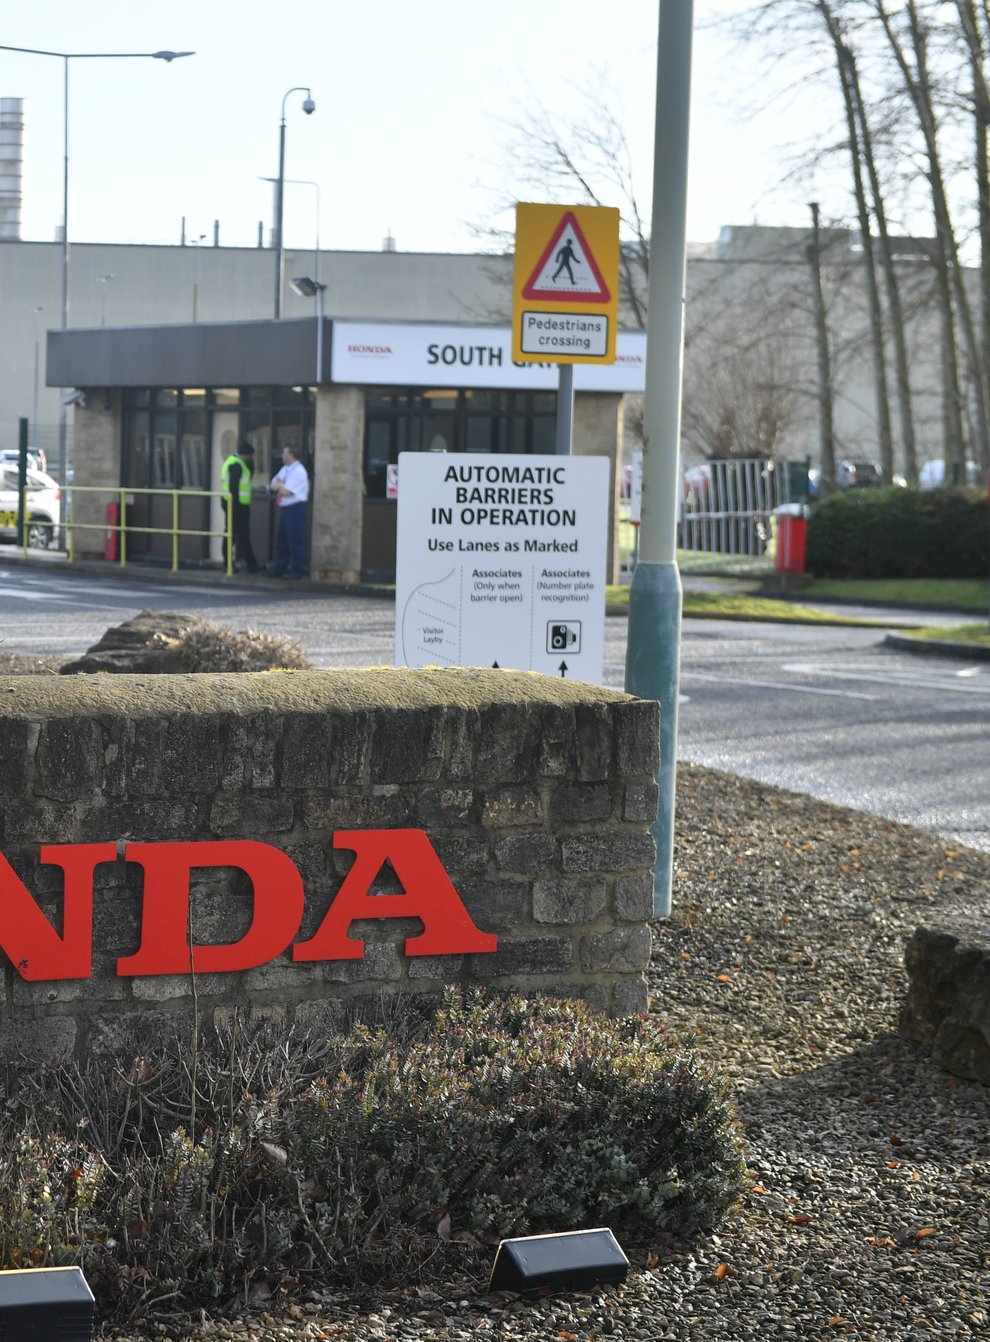 The Swindon Honda plant